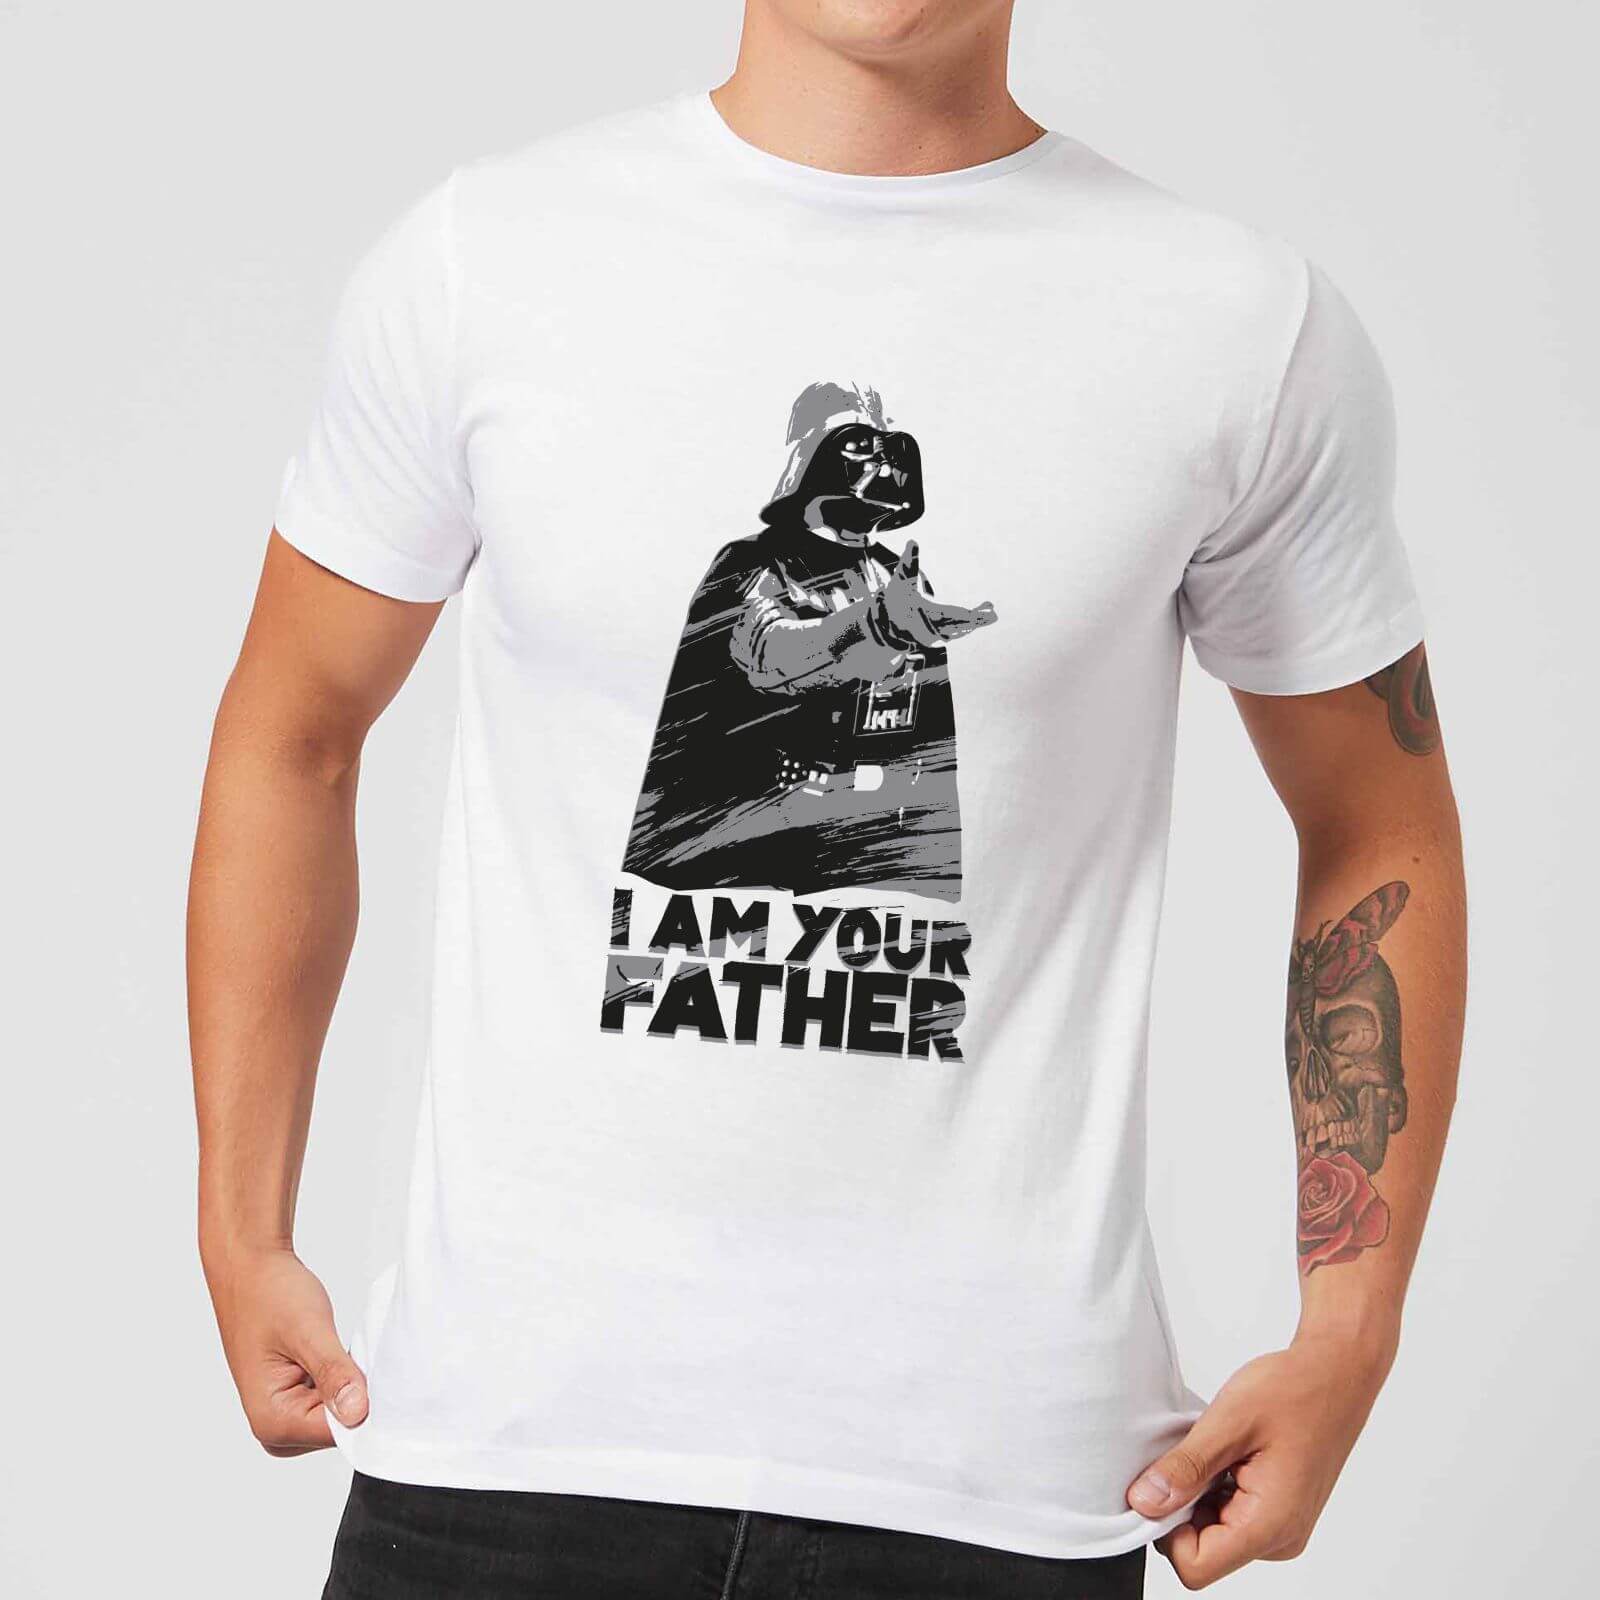 Camiseta Star Wars Darth Vader I Am Your Father Sketch - Hombre - Blanco - M - Blanco